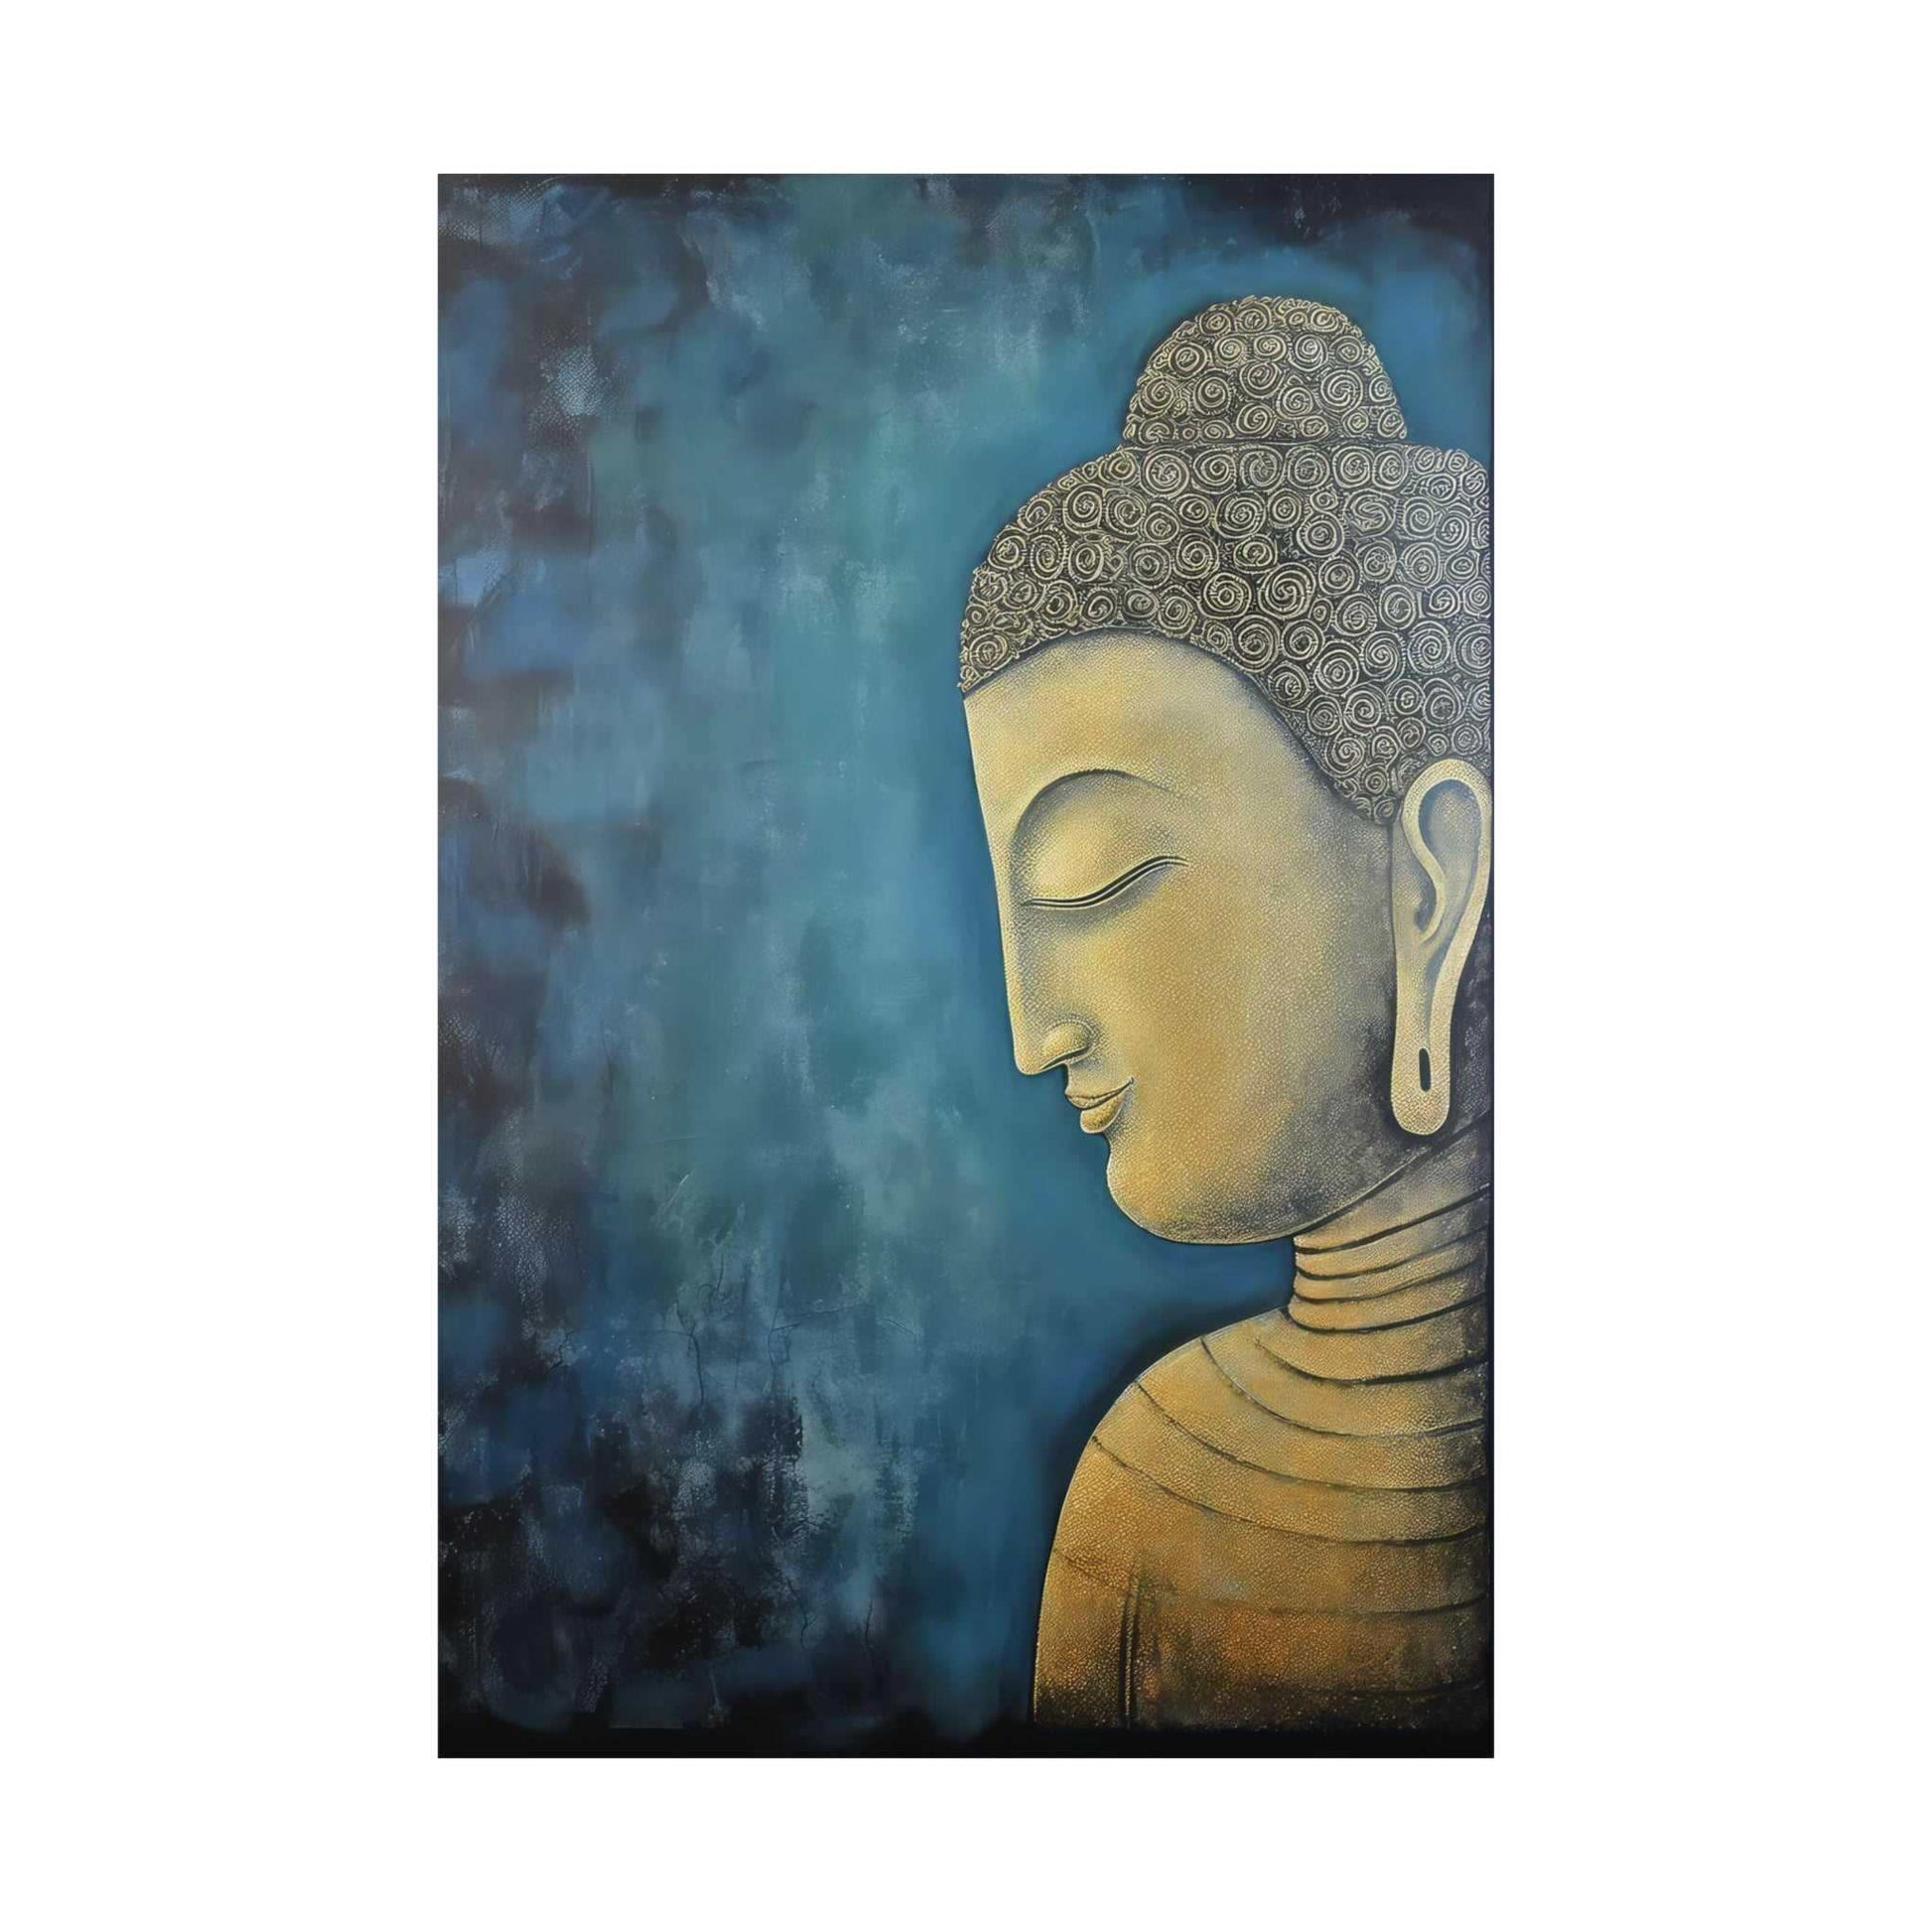 ZenArtBliss.com's Zen Buddha Art New York, a golden Buddha Head against a moody blue background, evokes New York's serene yet vibrant ambiance.